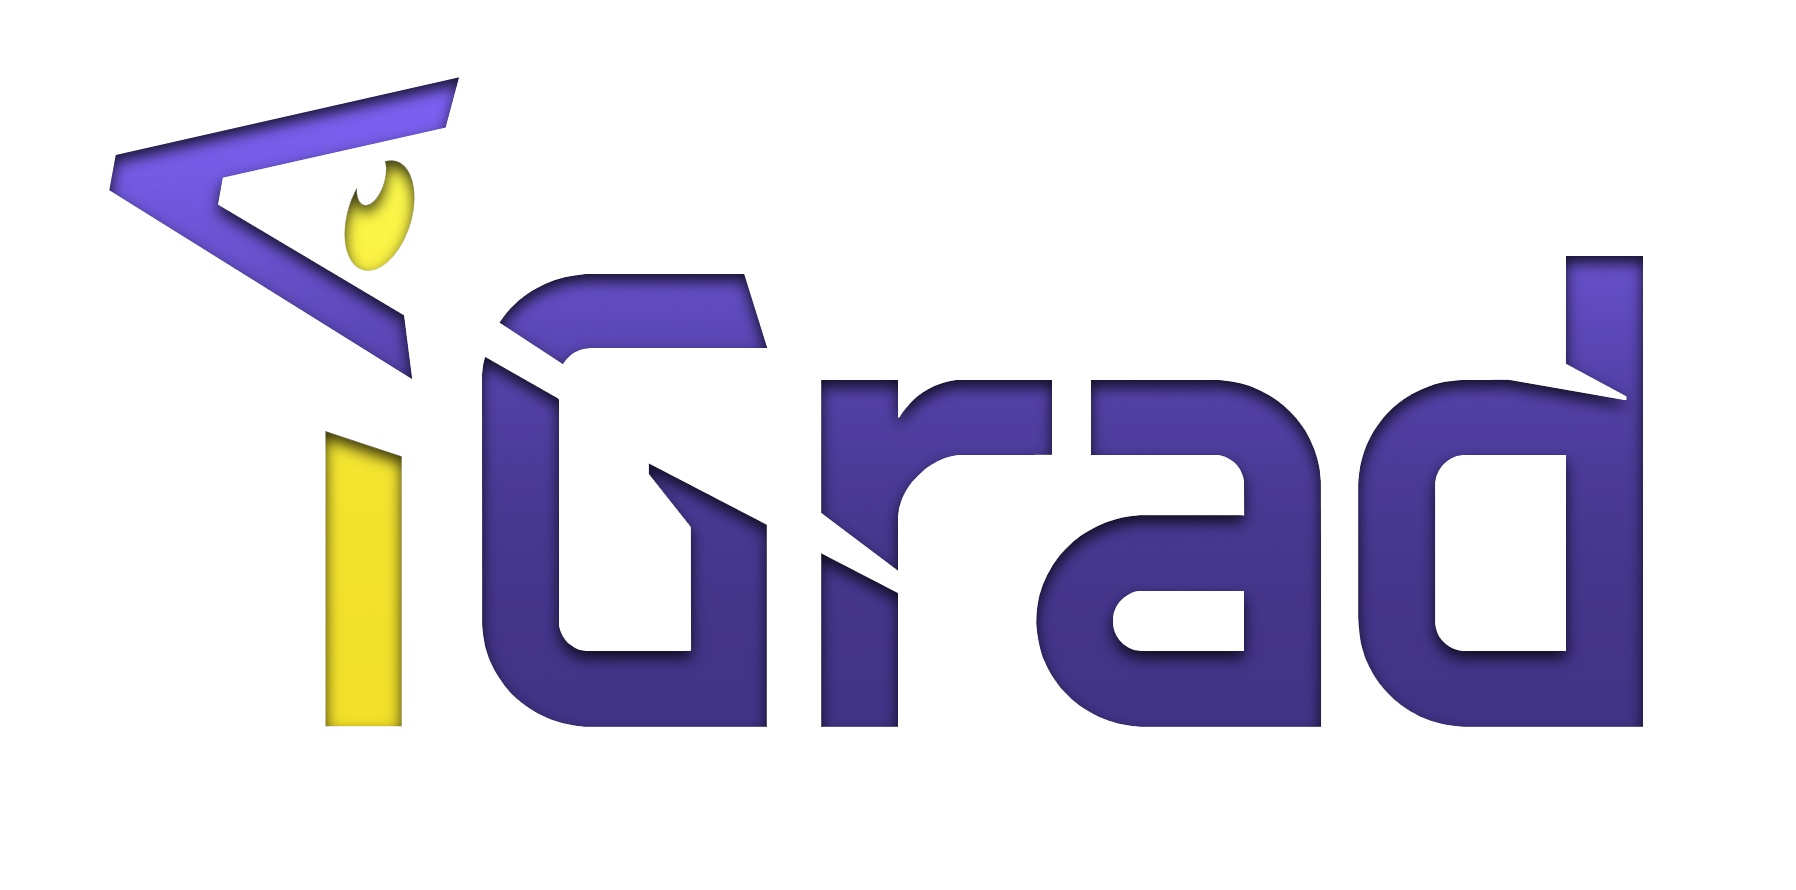 iGrad™ Logo